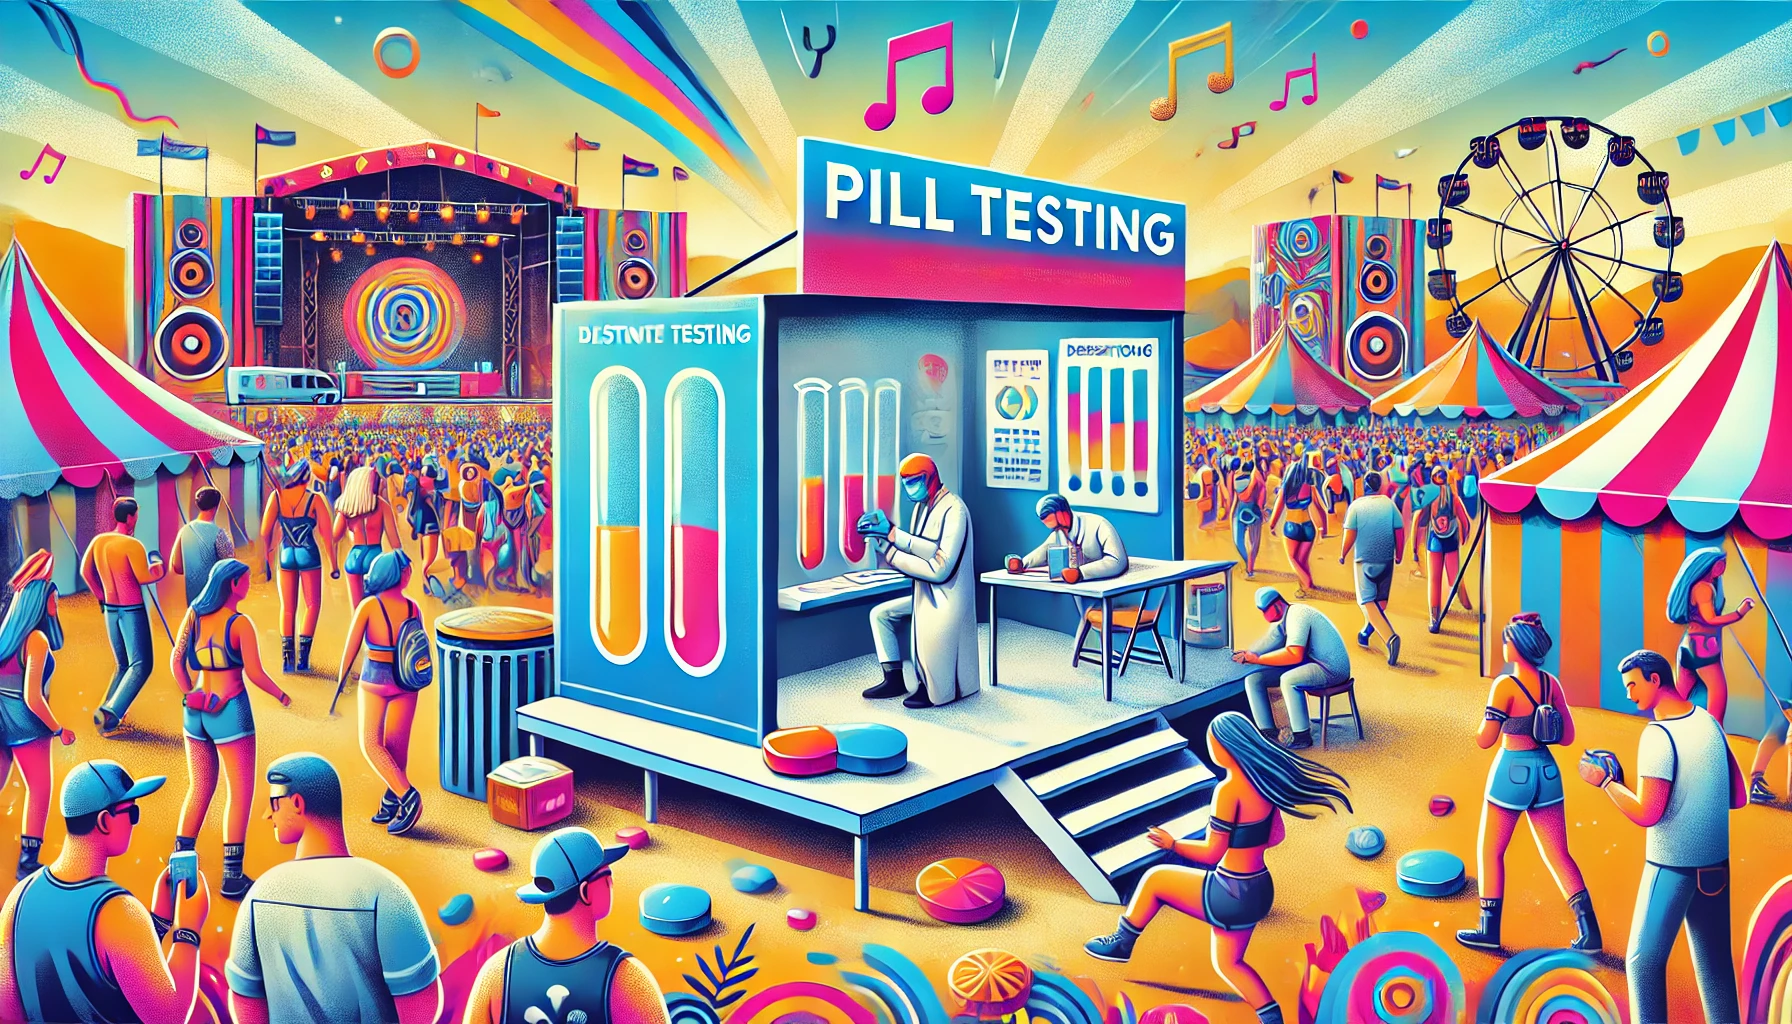 Reducing Festival Drug Harm: Pill Testing Initiative in Australia